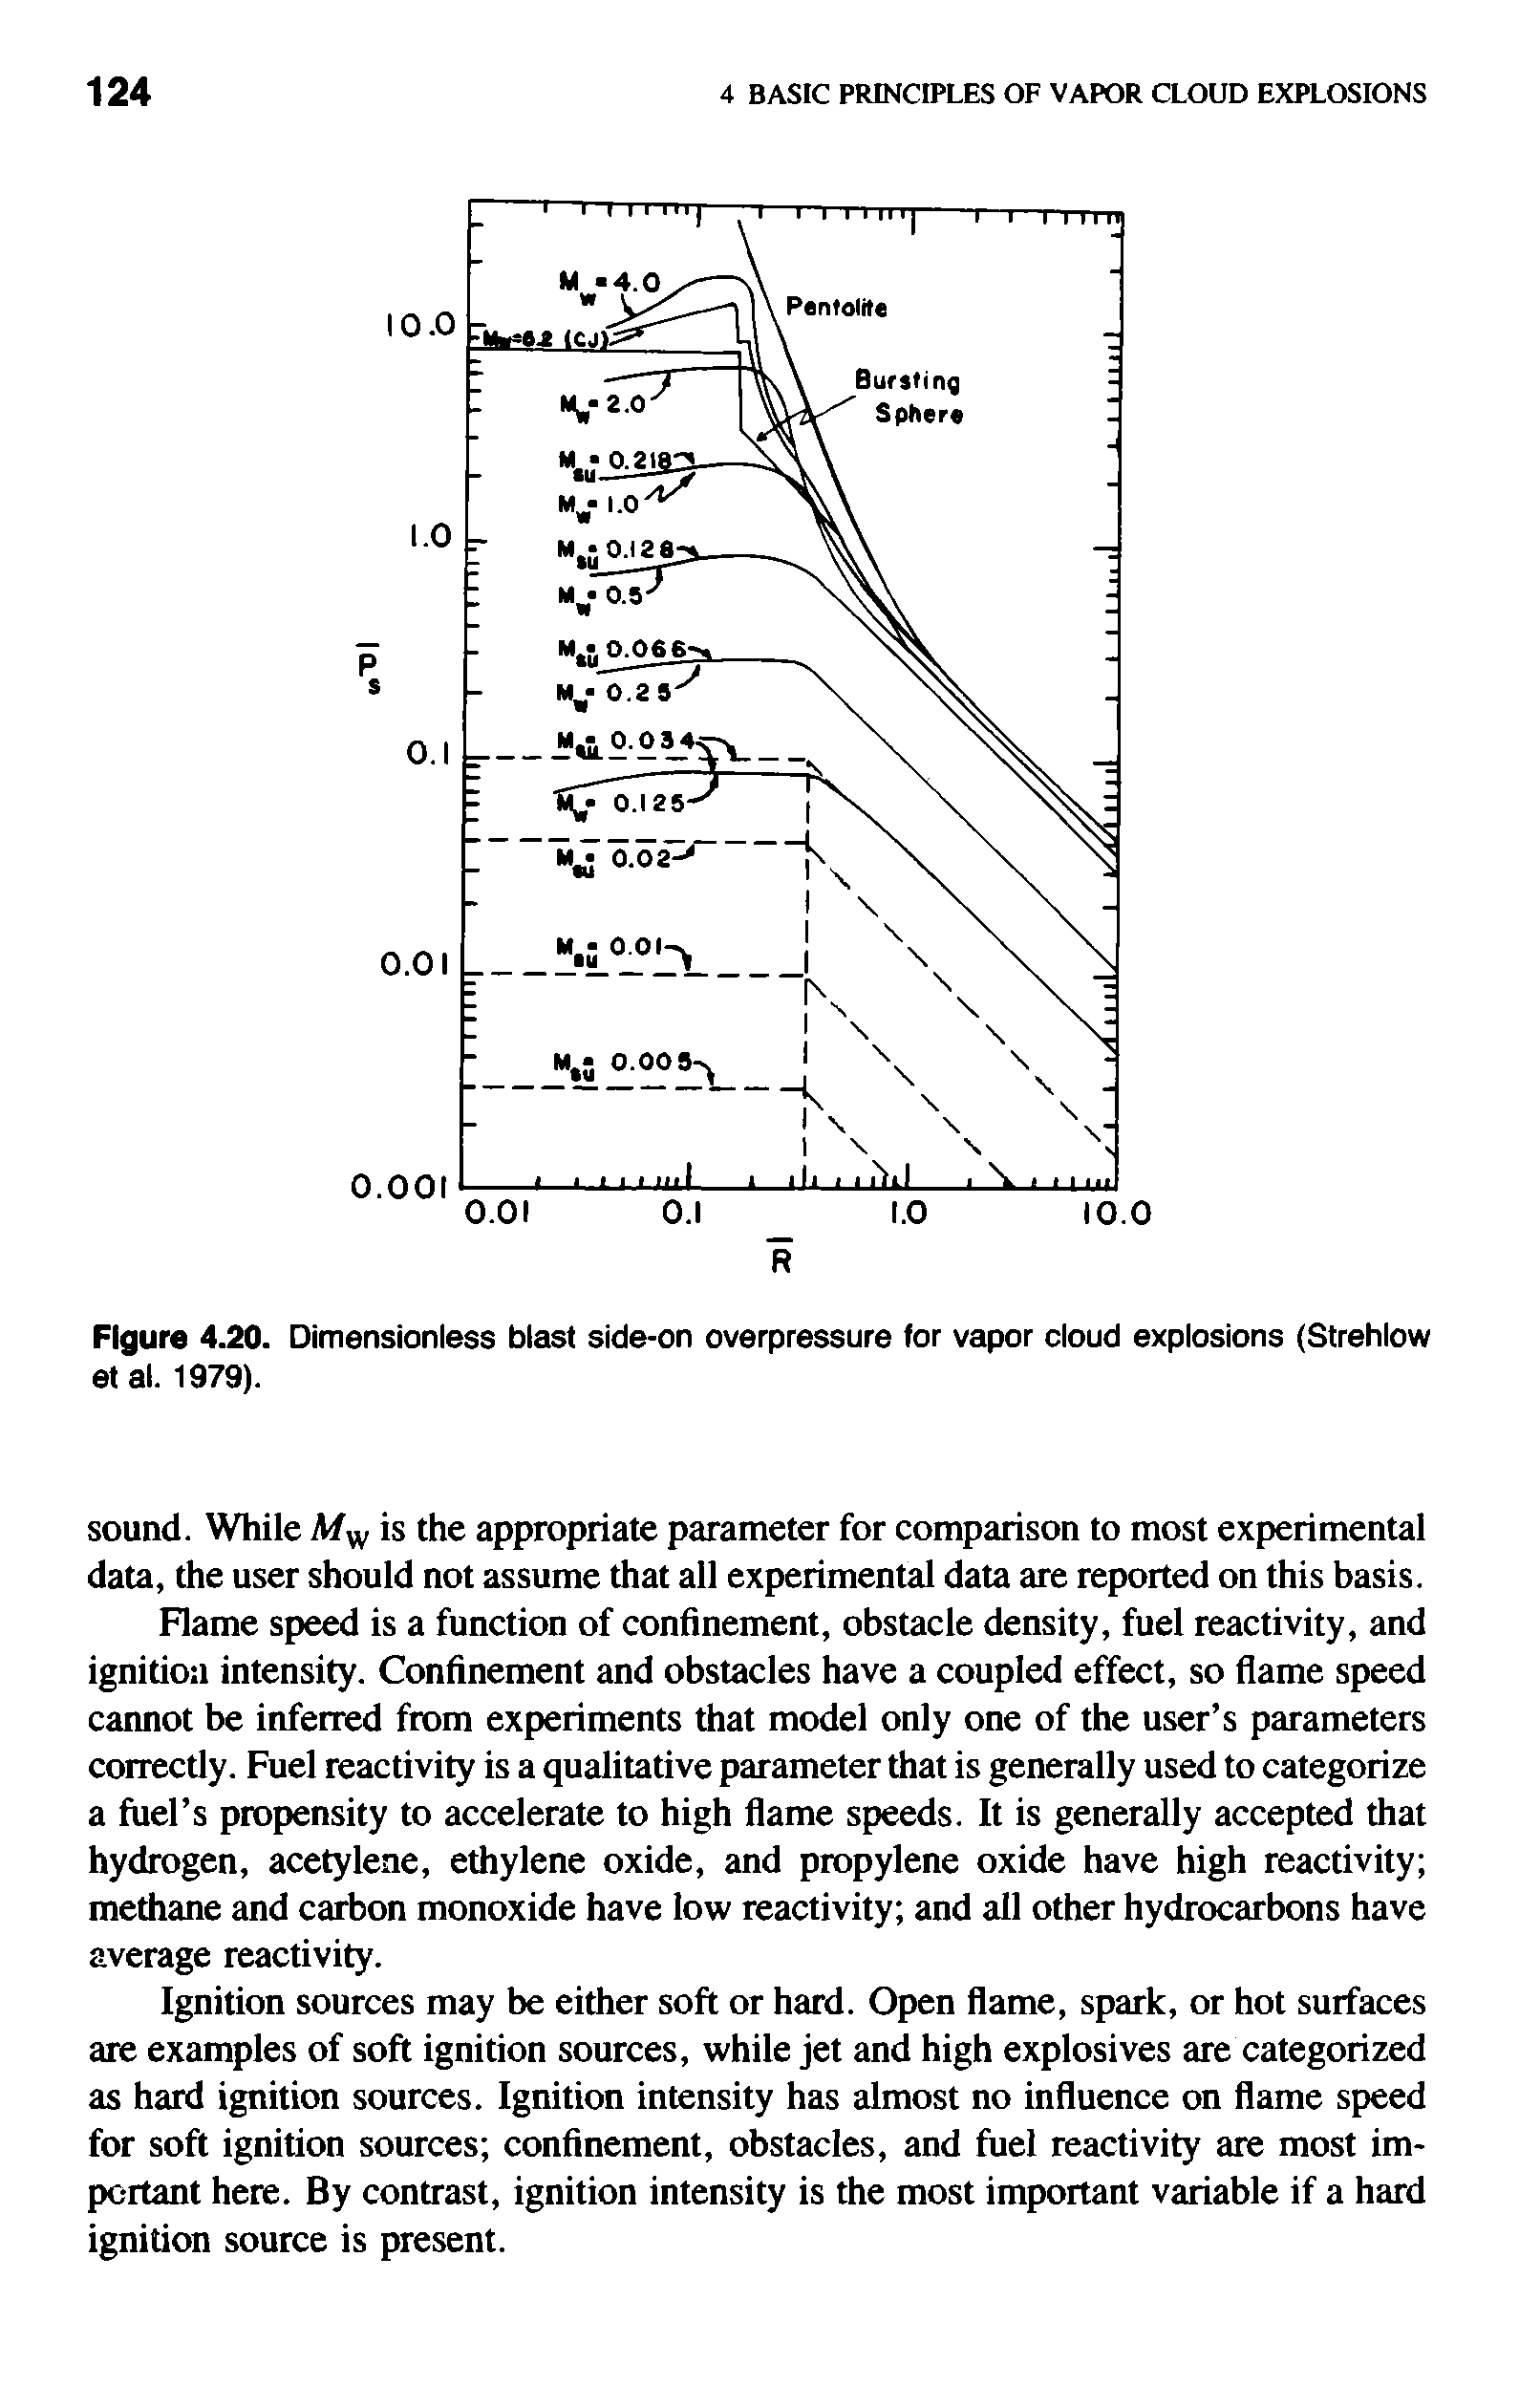 Figure 4.20. Dimensionless blast side-on overpressure for vapor cloud explosions (Strehlow etal. 1979).